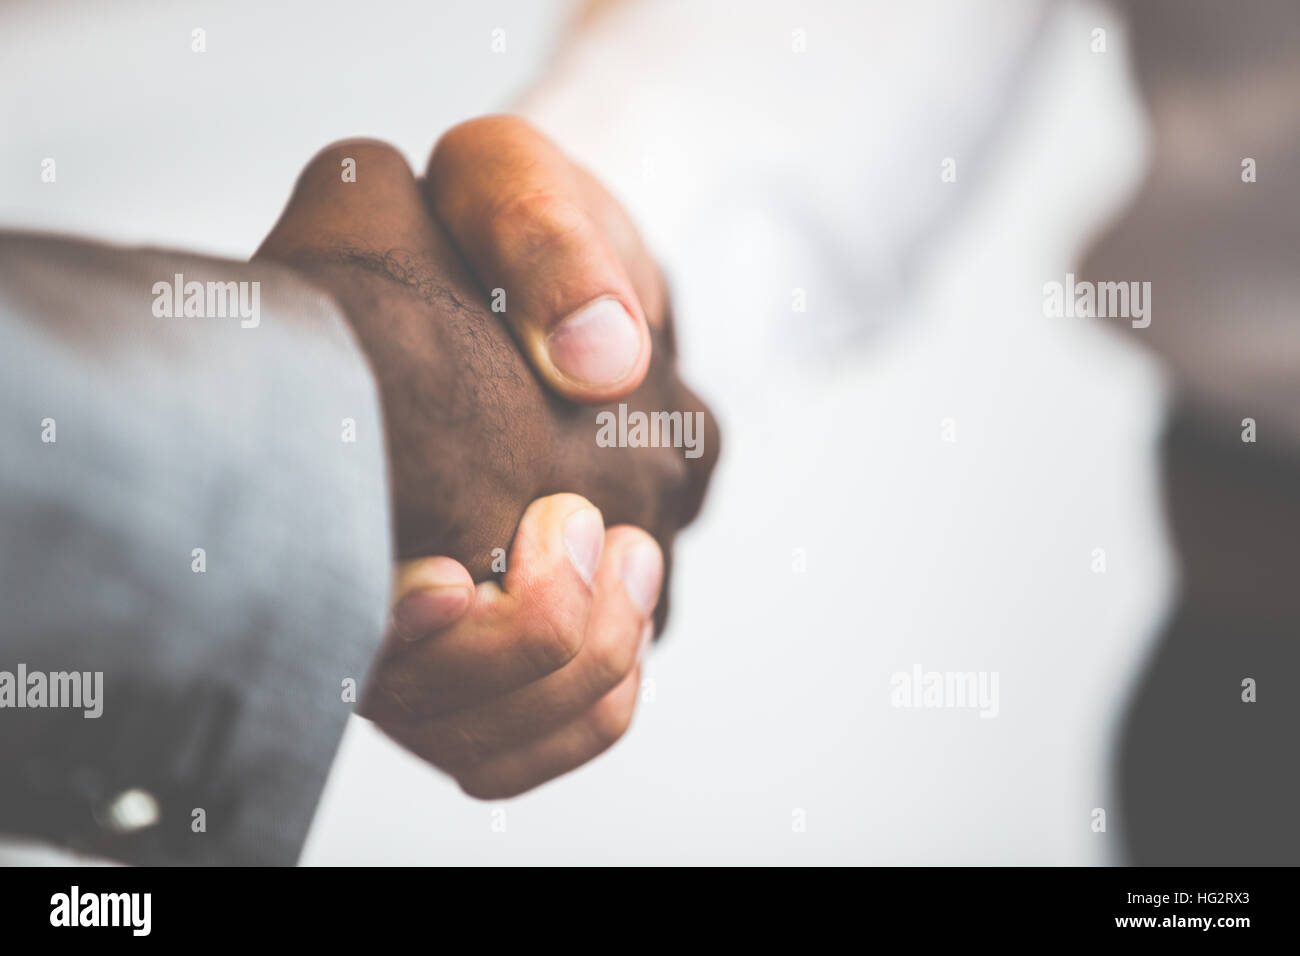 Handshake between african and a caucasian man Stock Photo